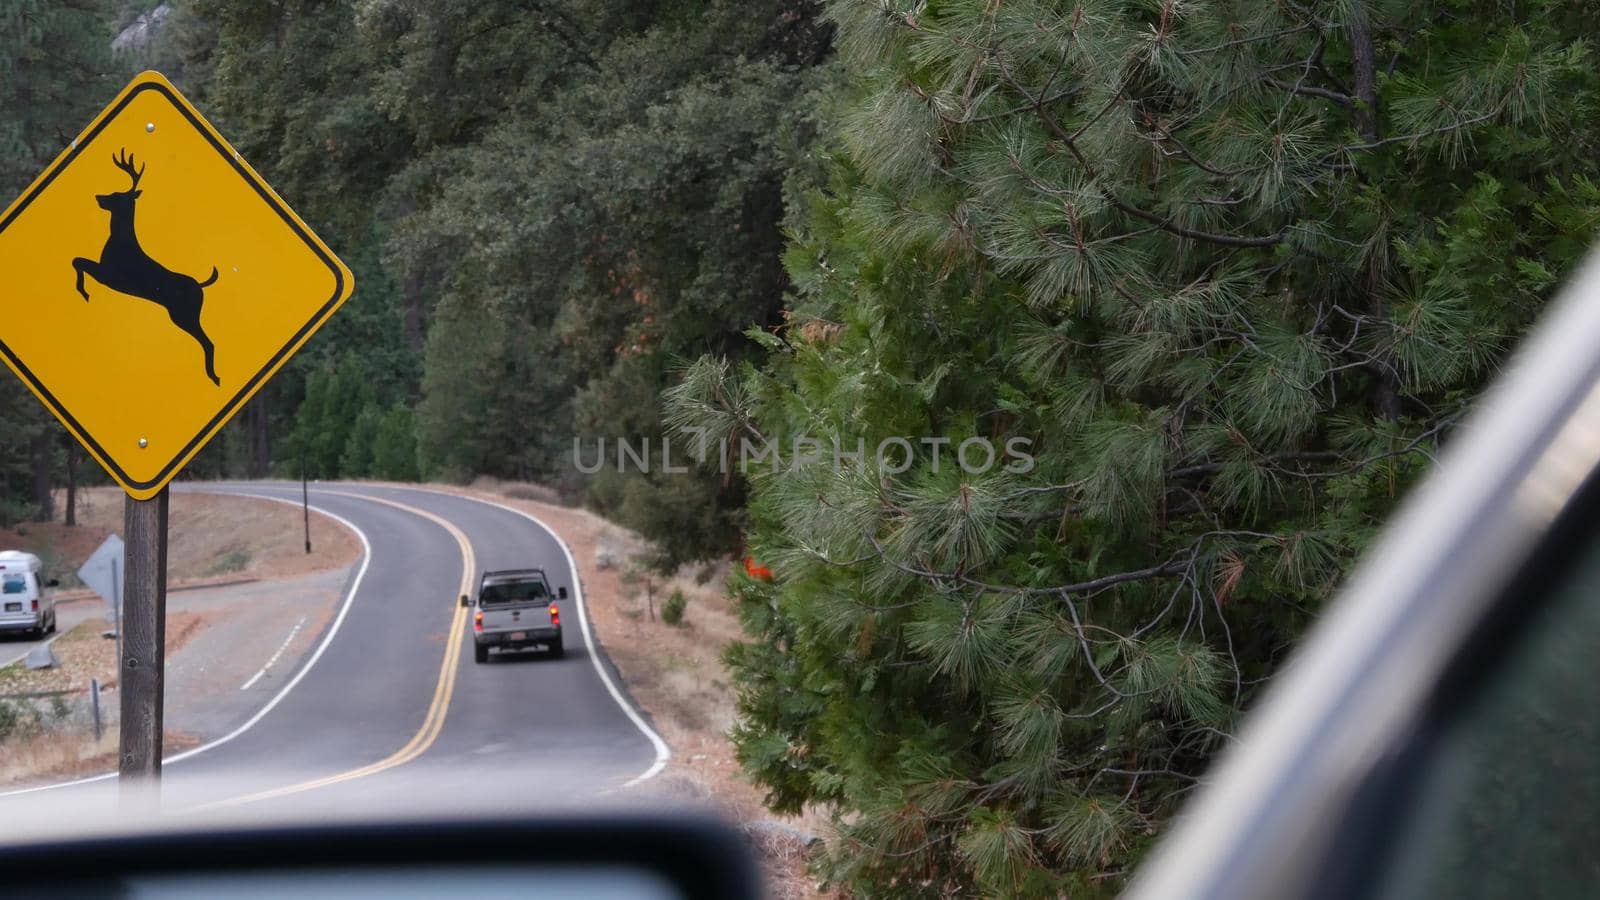 Deer crossing yellow road sign, California USA. Wild animal xing, traffic safety by DogoraSun